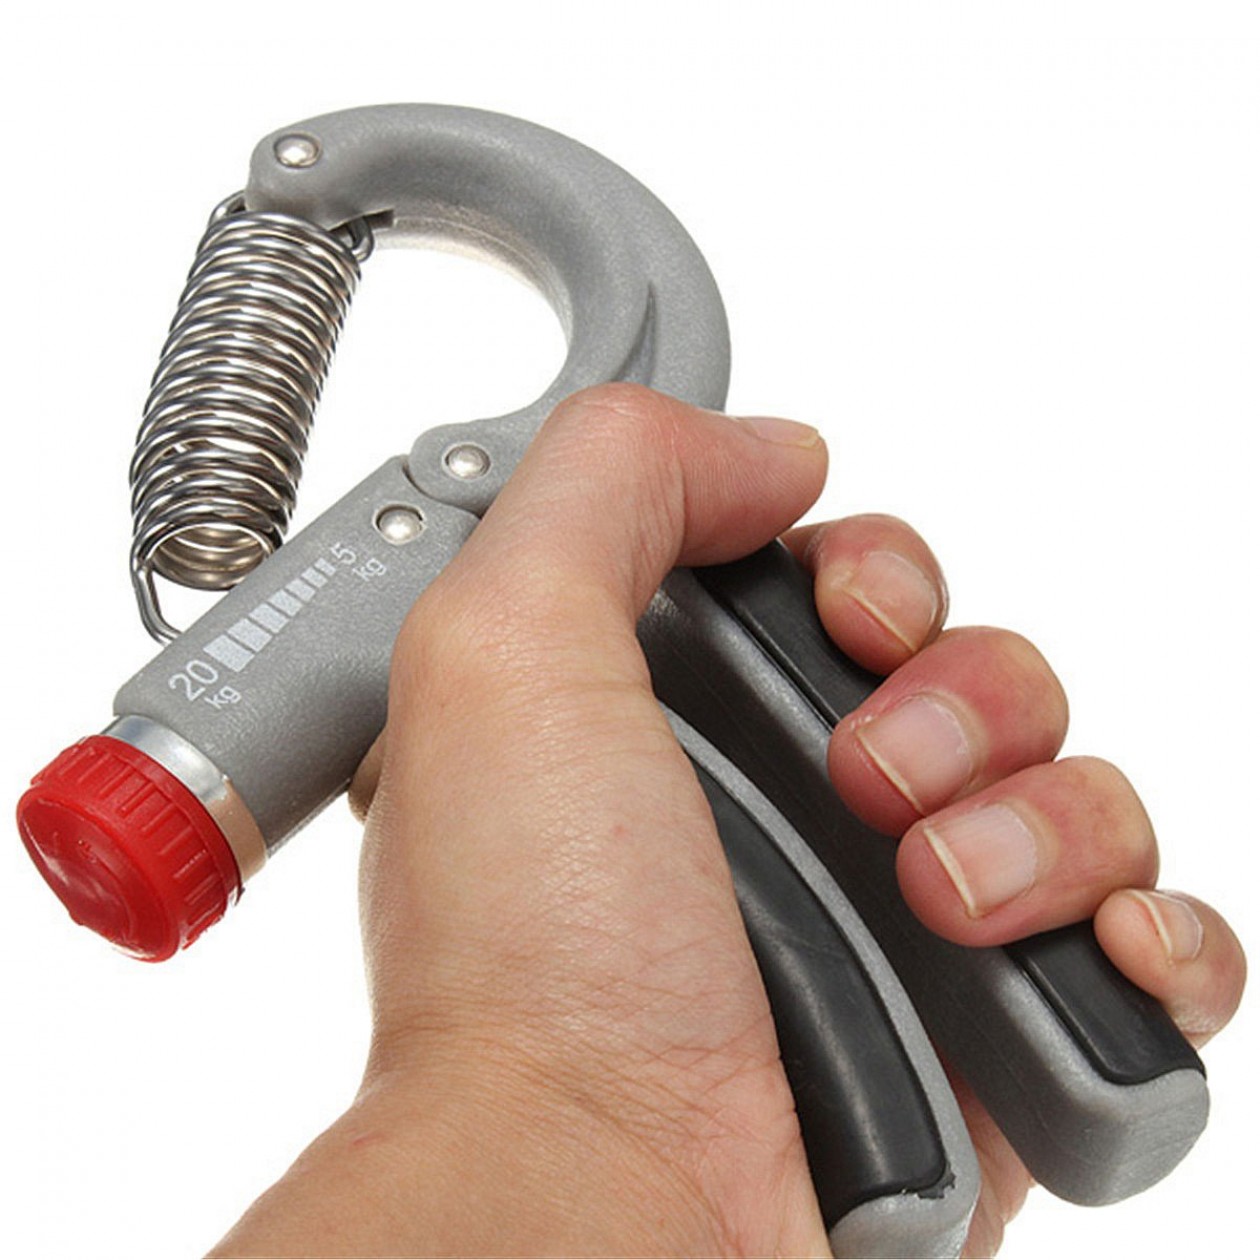 Hand Power Grip Exerciser